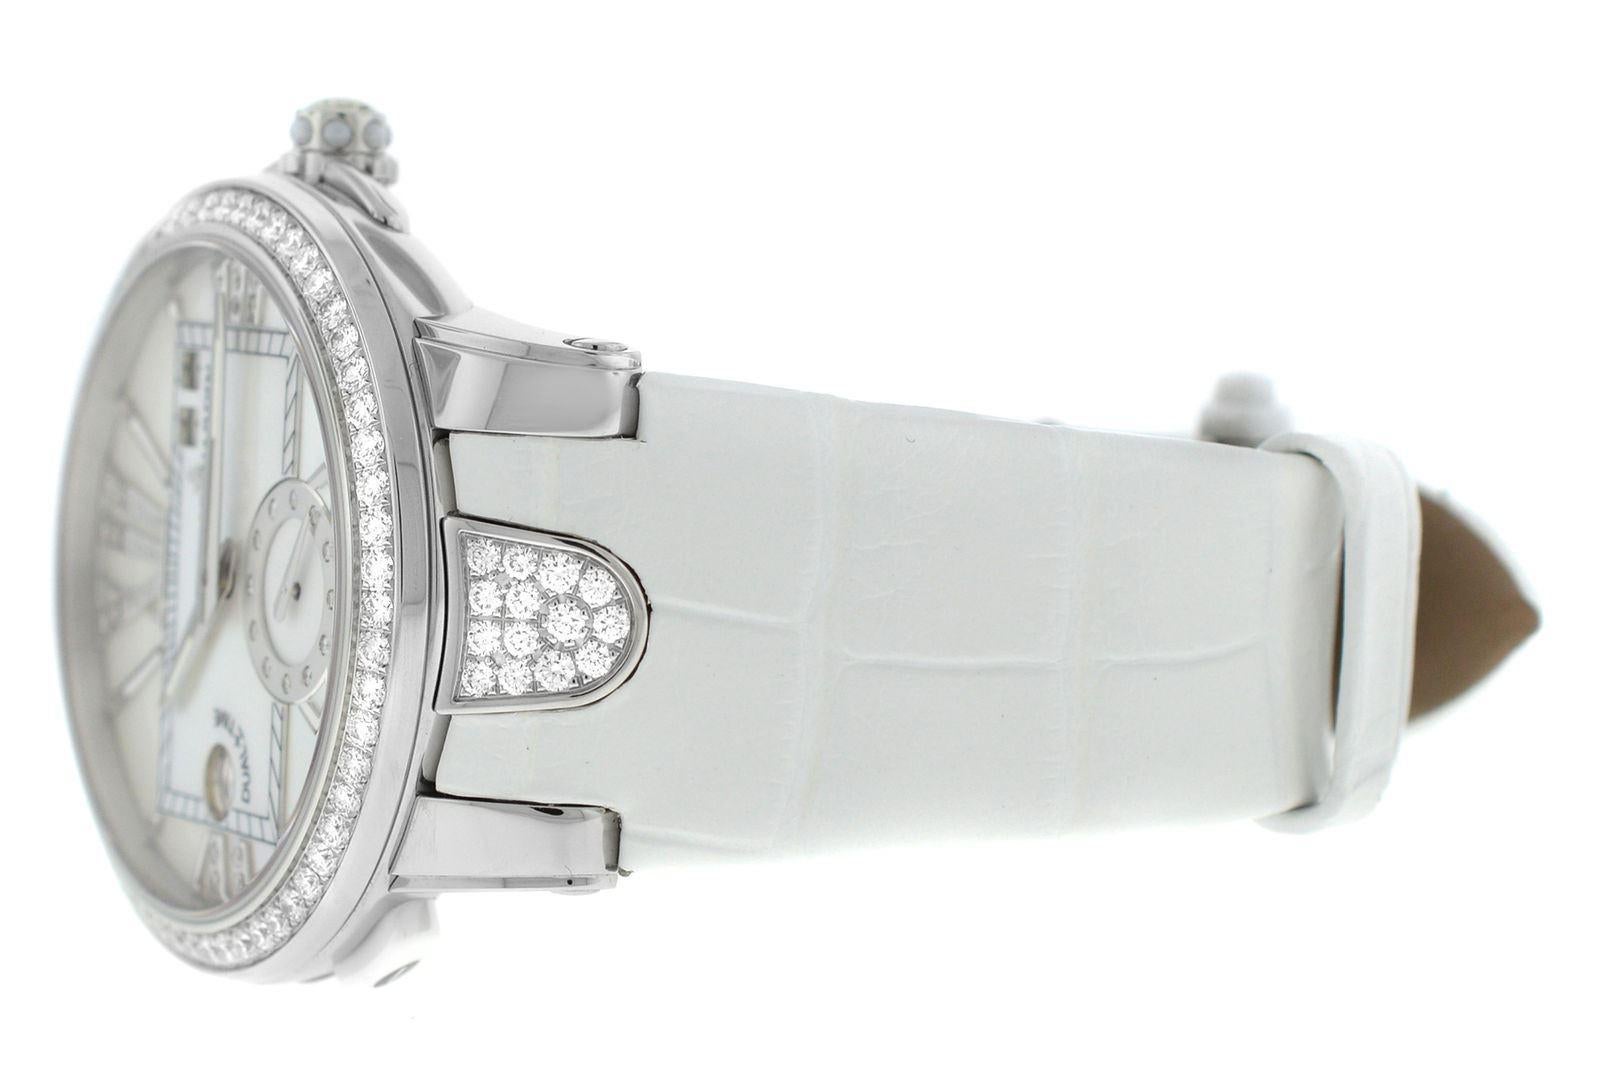 New Ladies Ulysse Nardin Executive Dual Time Diamond Watch For Sale 1